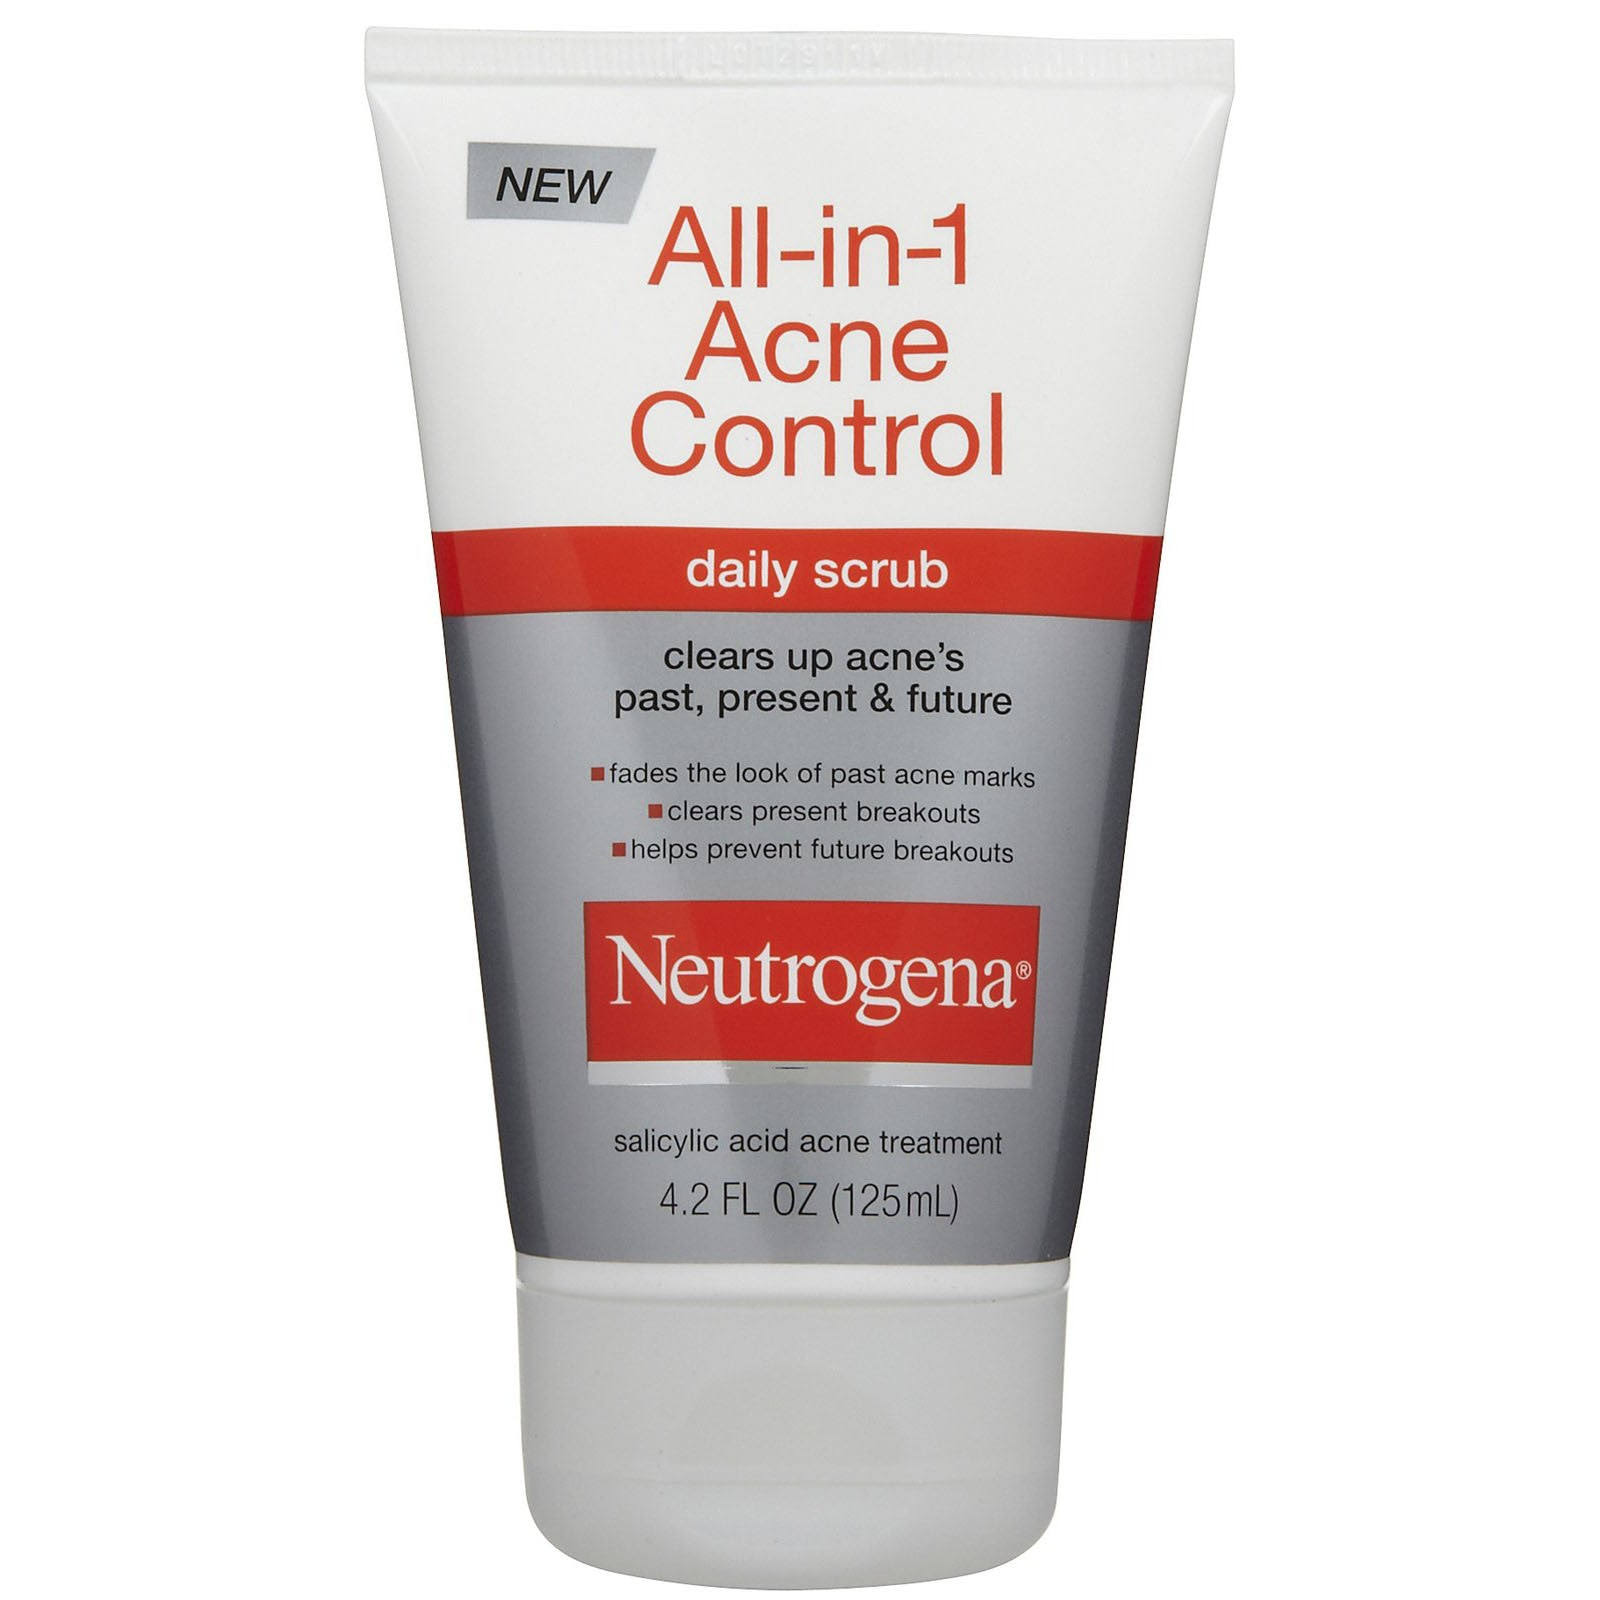 Neutrogena All in 1 Acne Control Daily Scrub - 4.2oz